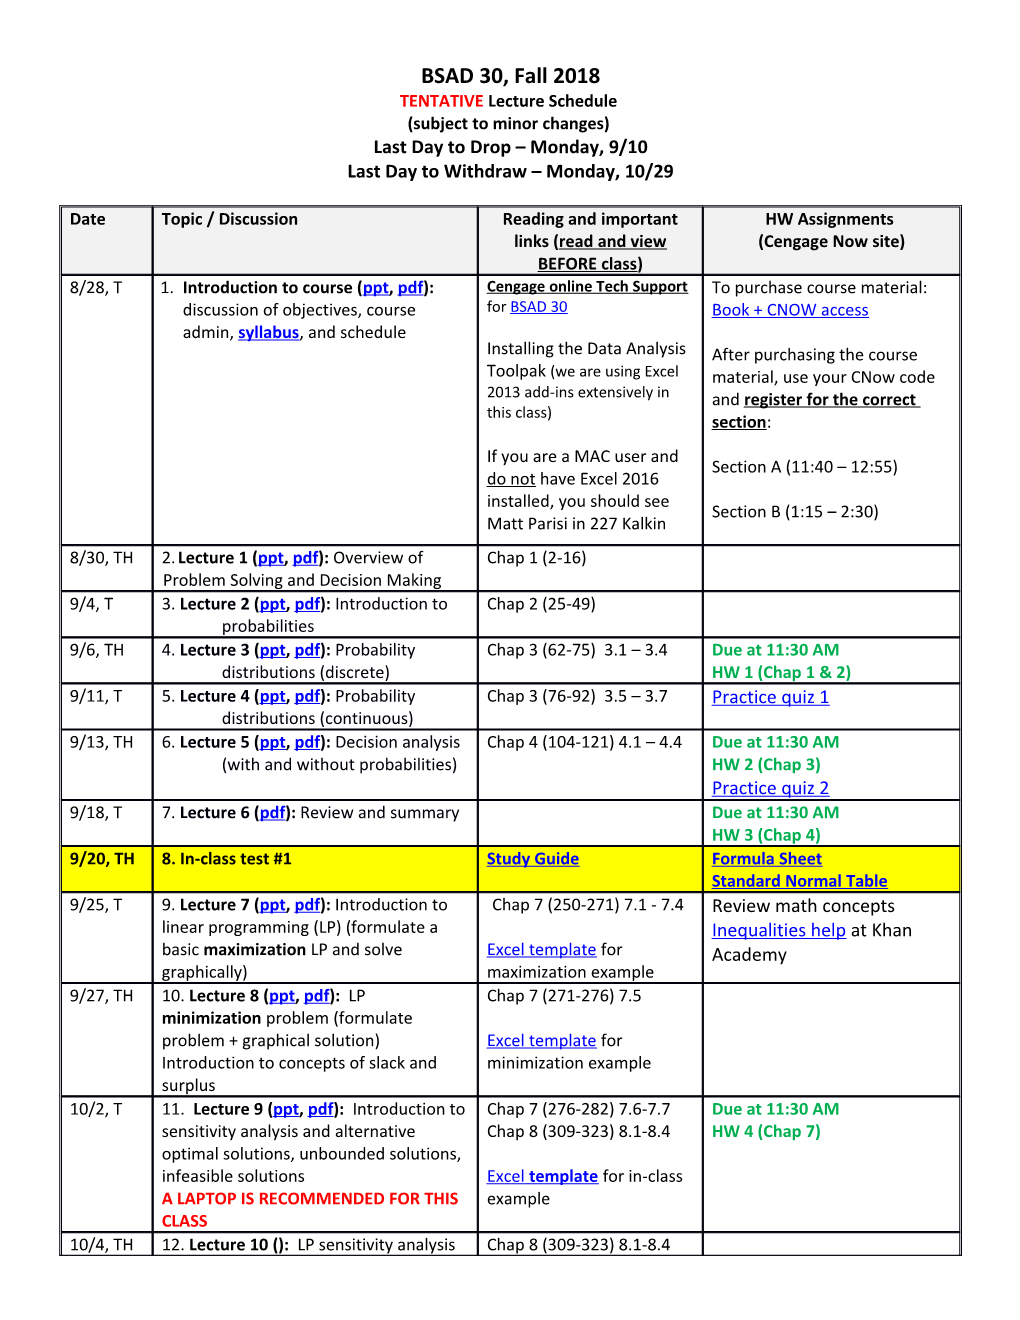 TENTATIVE Lecture Schedule OPIM 222, Fall 2001